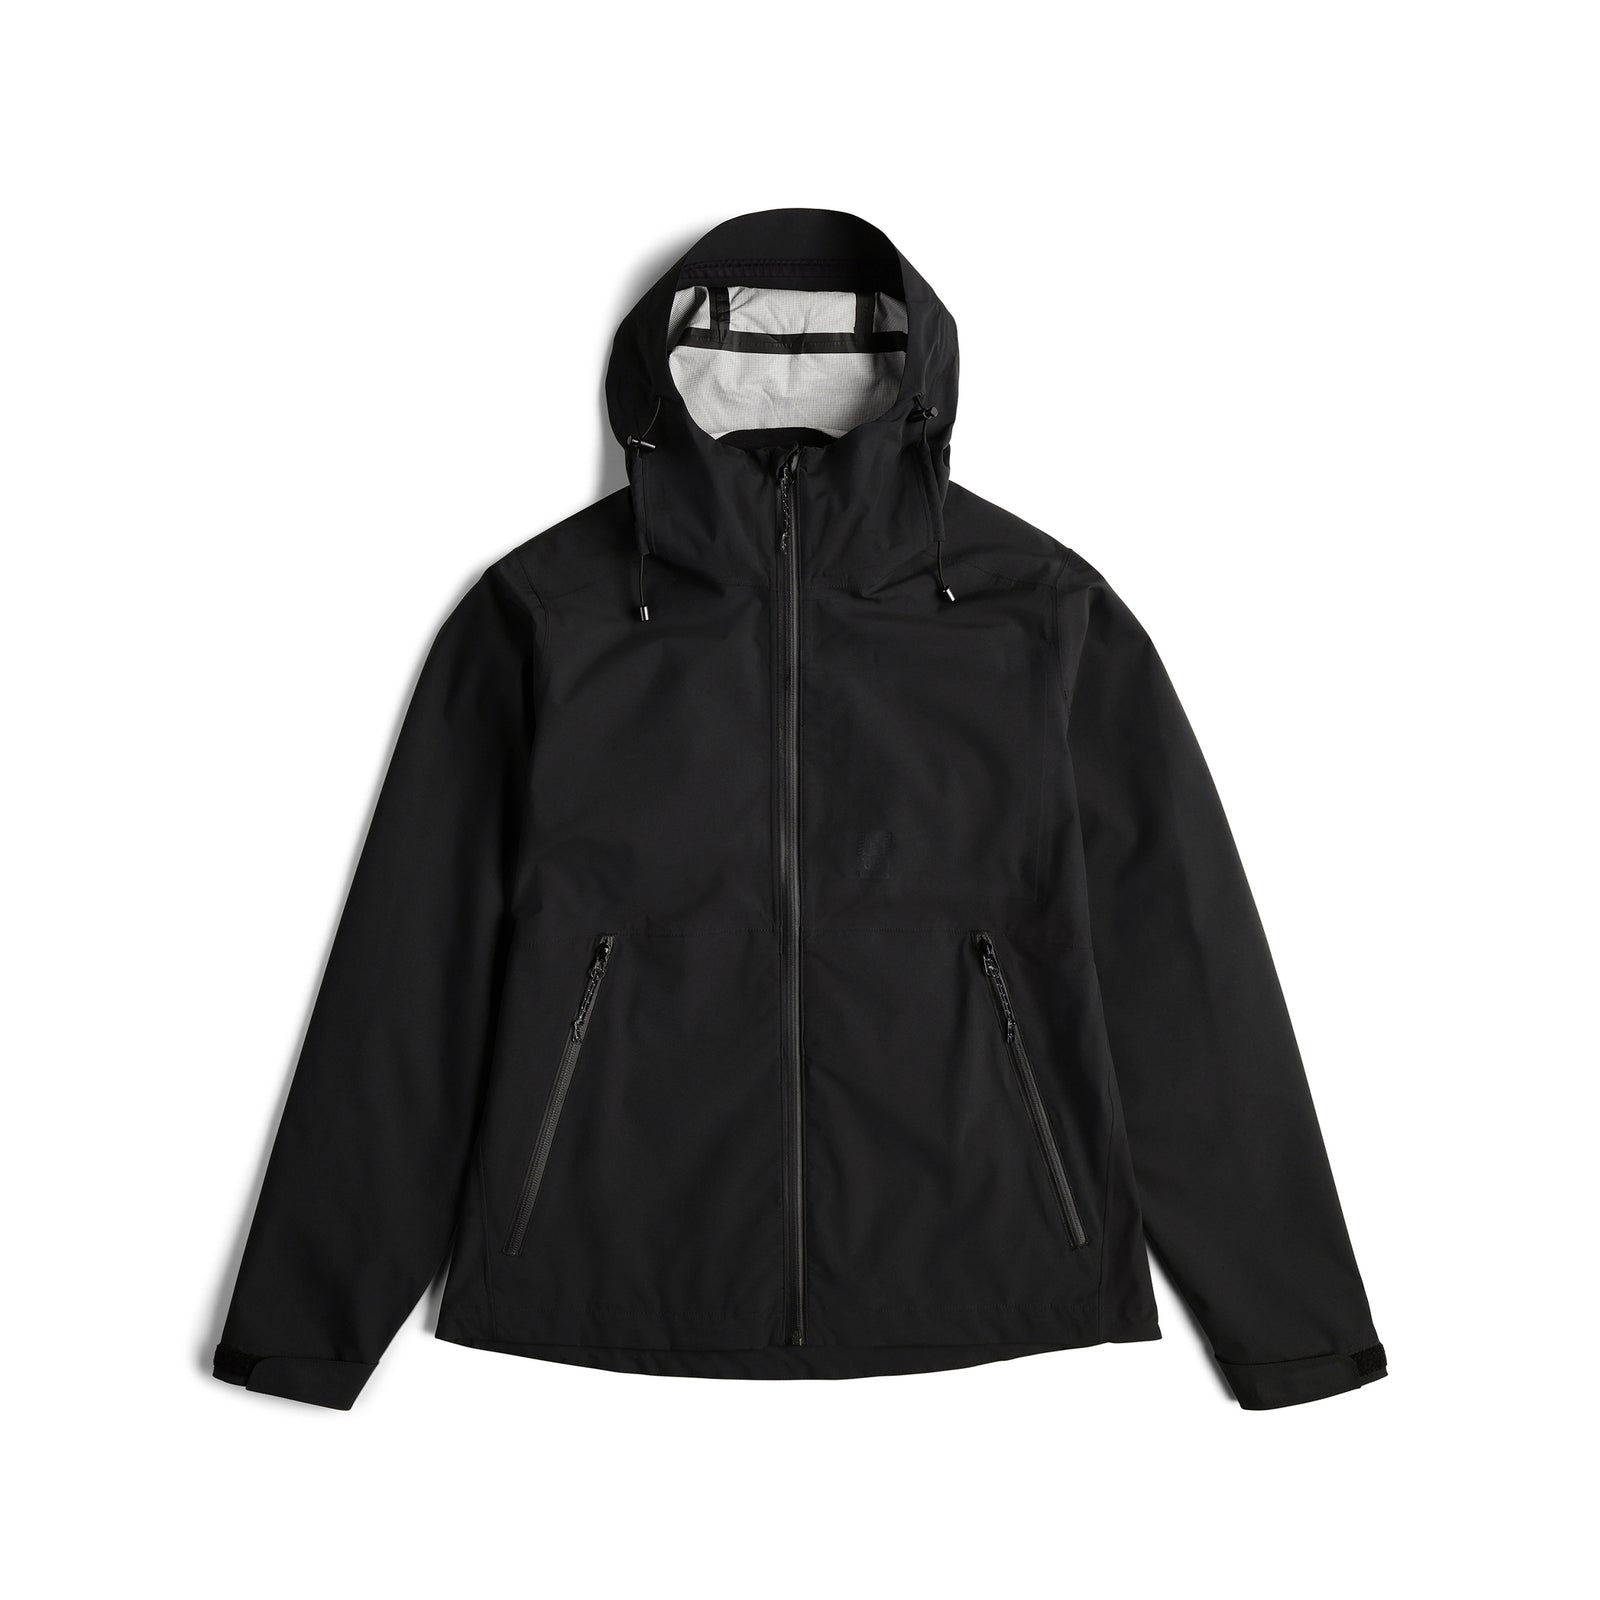 Topo Designs Women's Global Jacket lightweight packable 10k waterproof rain coat in recycled "Black" polyester.